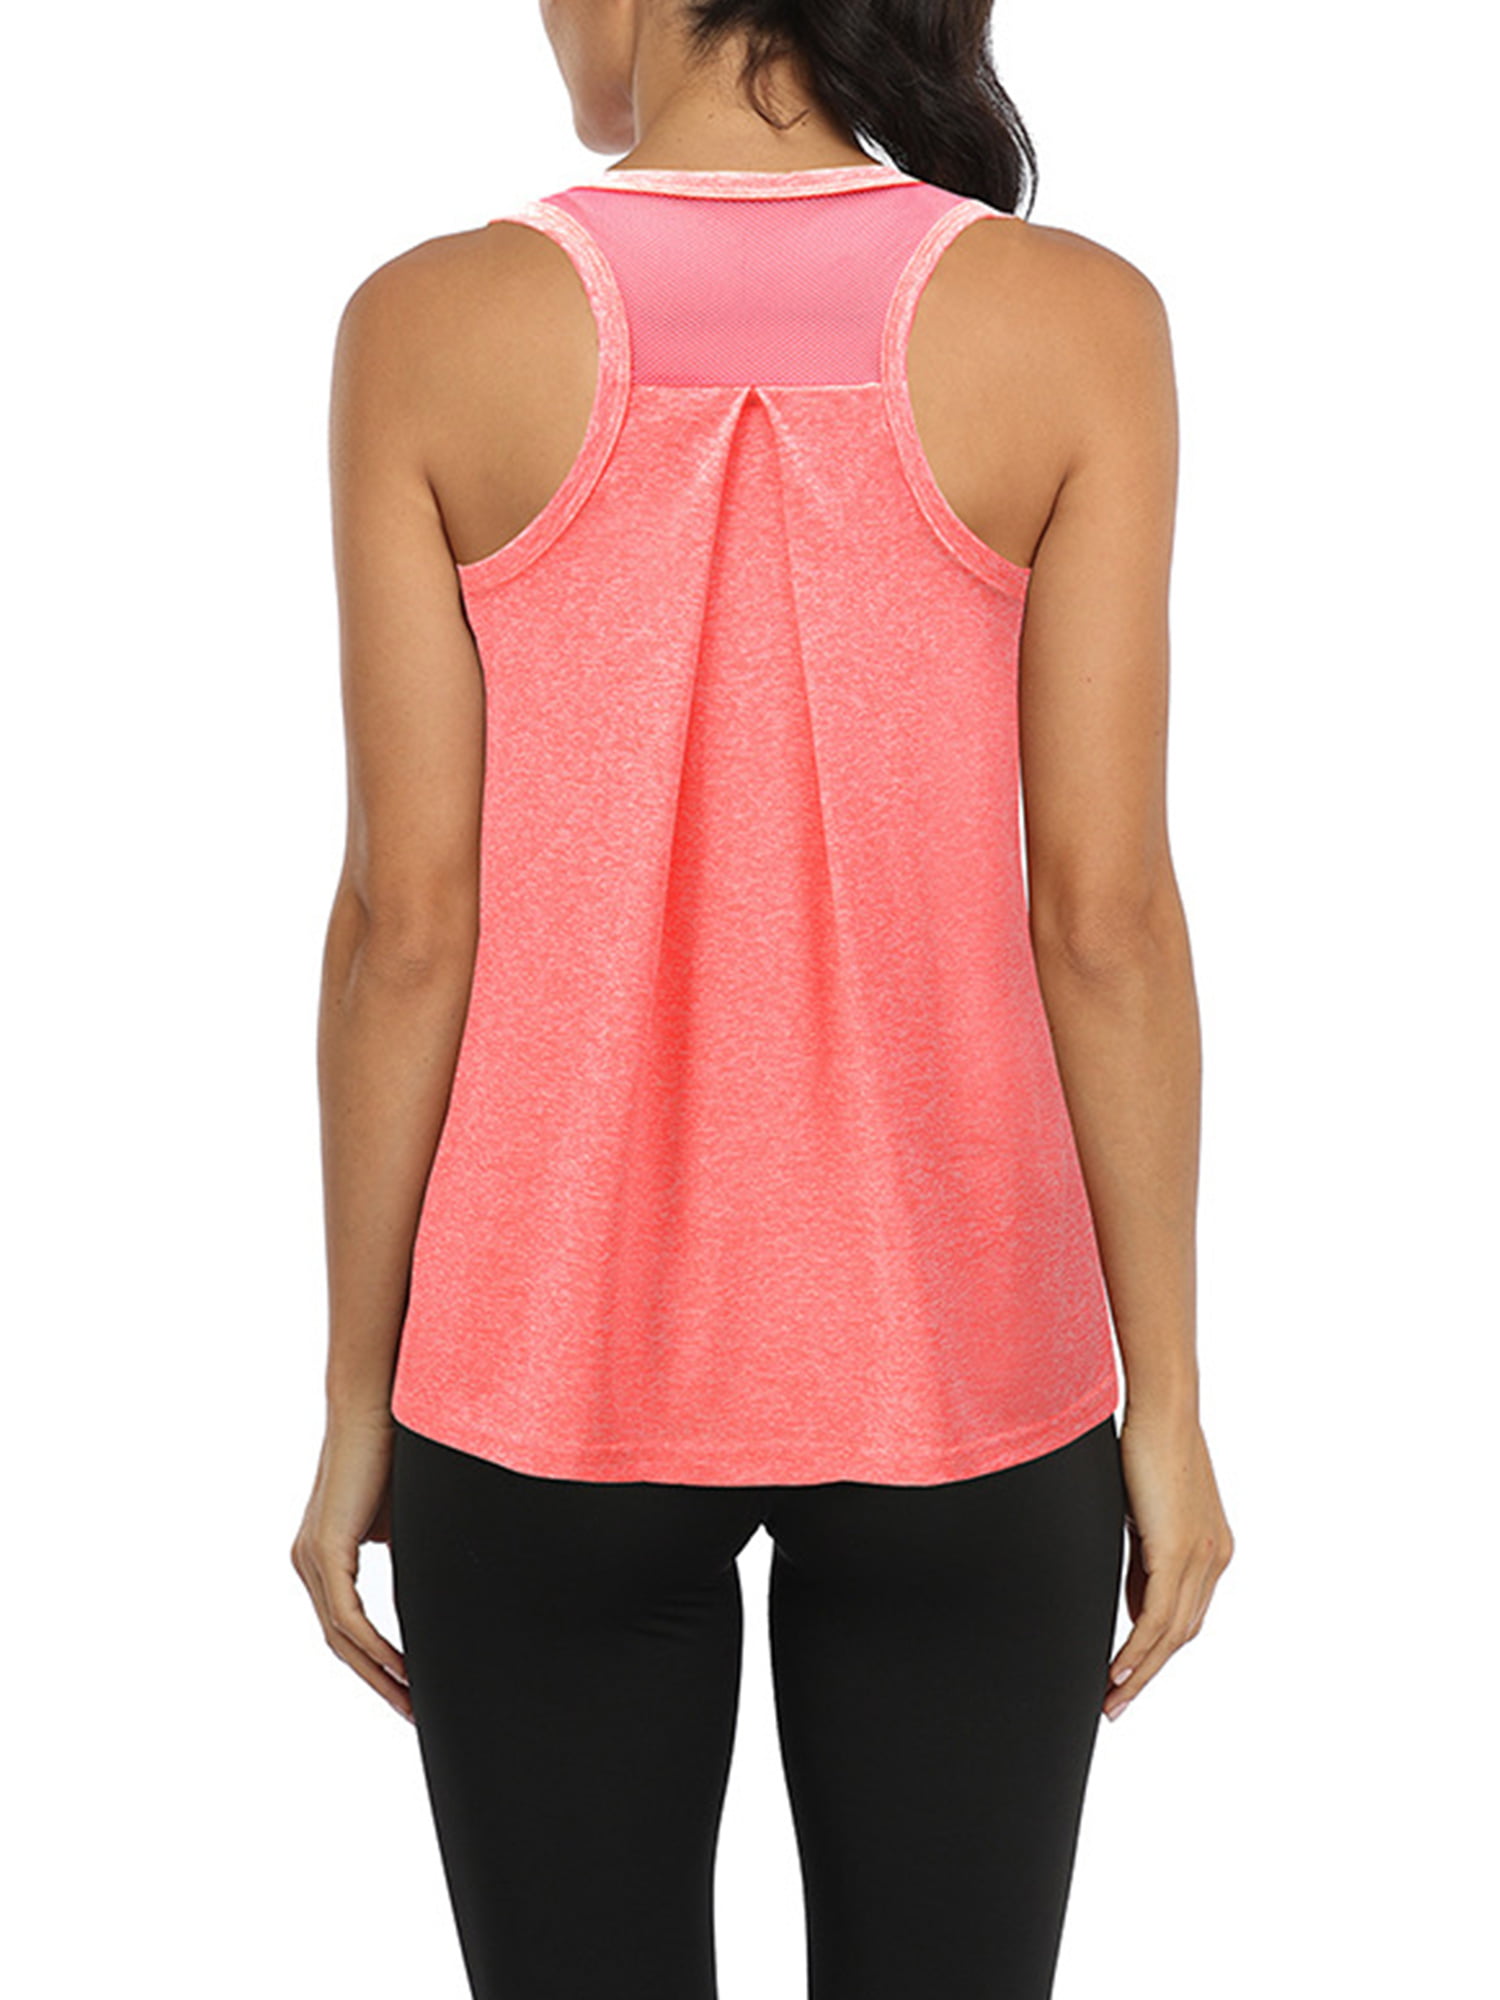 Women's Athletic Mesh Vests Yoga T-back Sleeveless Tank Tops Sports Quick dry